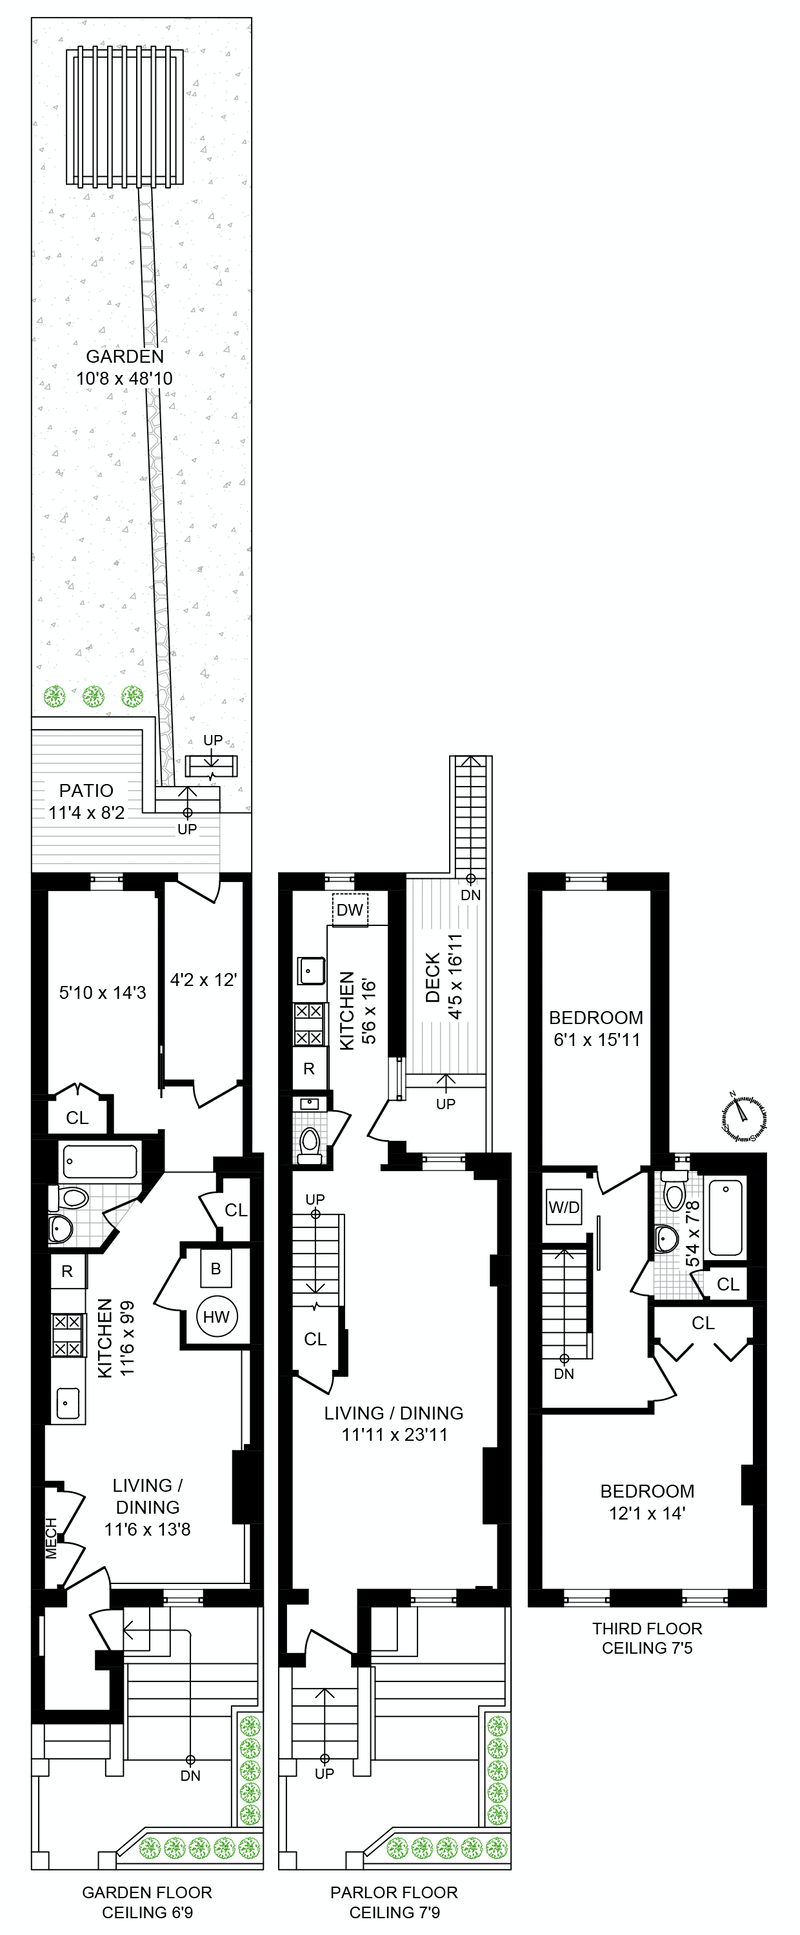 Floorplan for 181 16th Street